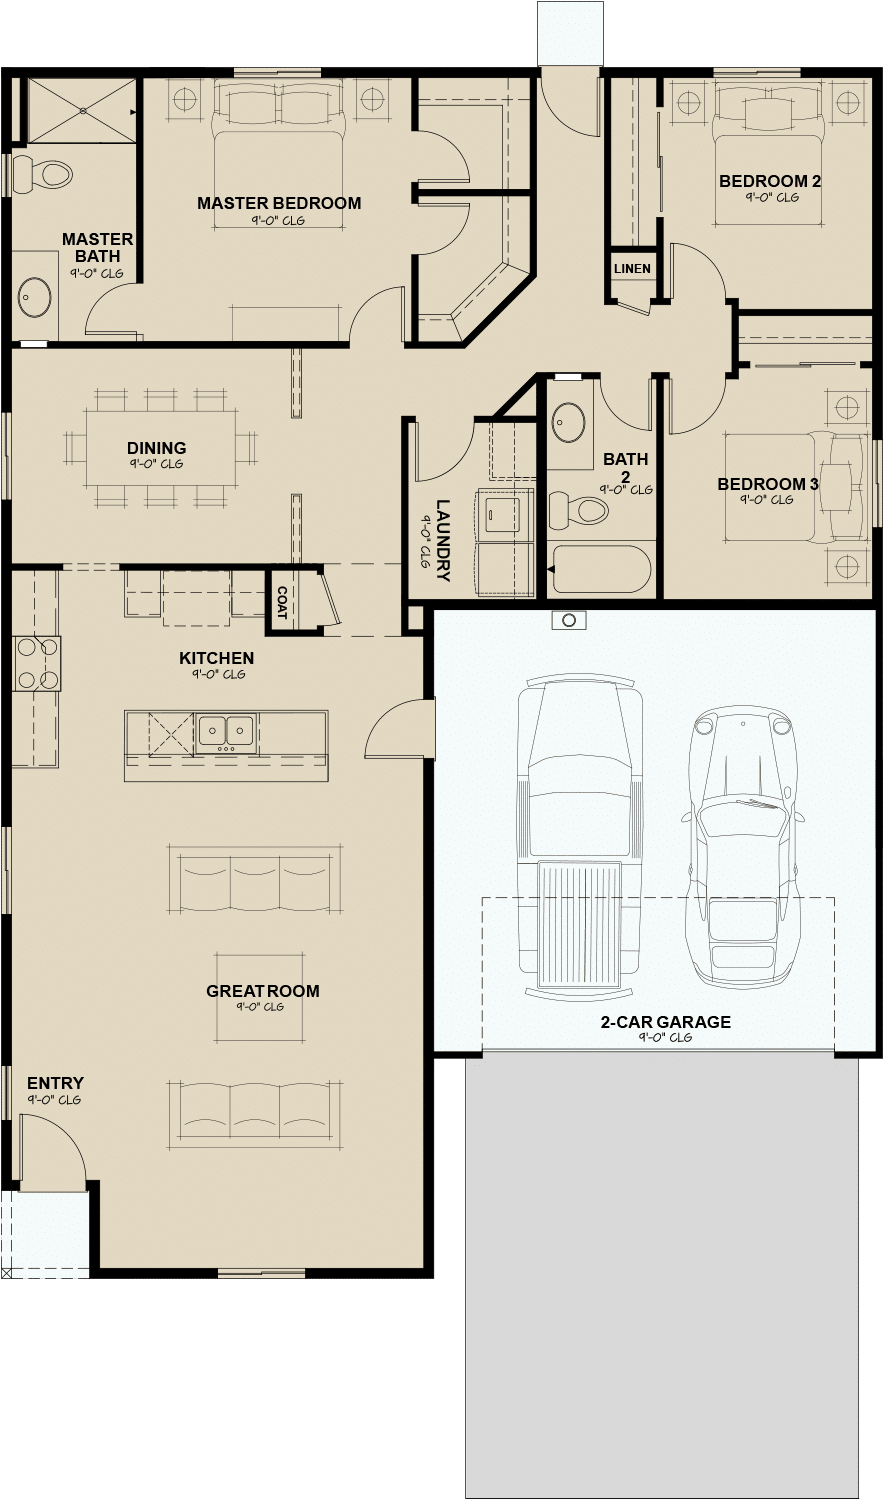 Flats-at-Ponderosa-Plan-3-1565-base-floorplan